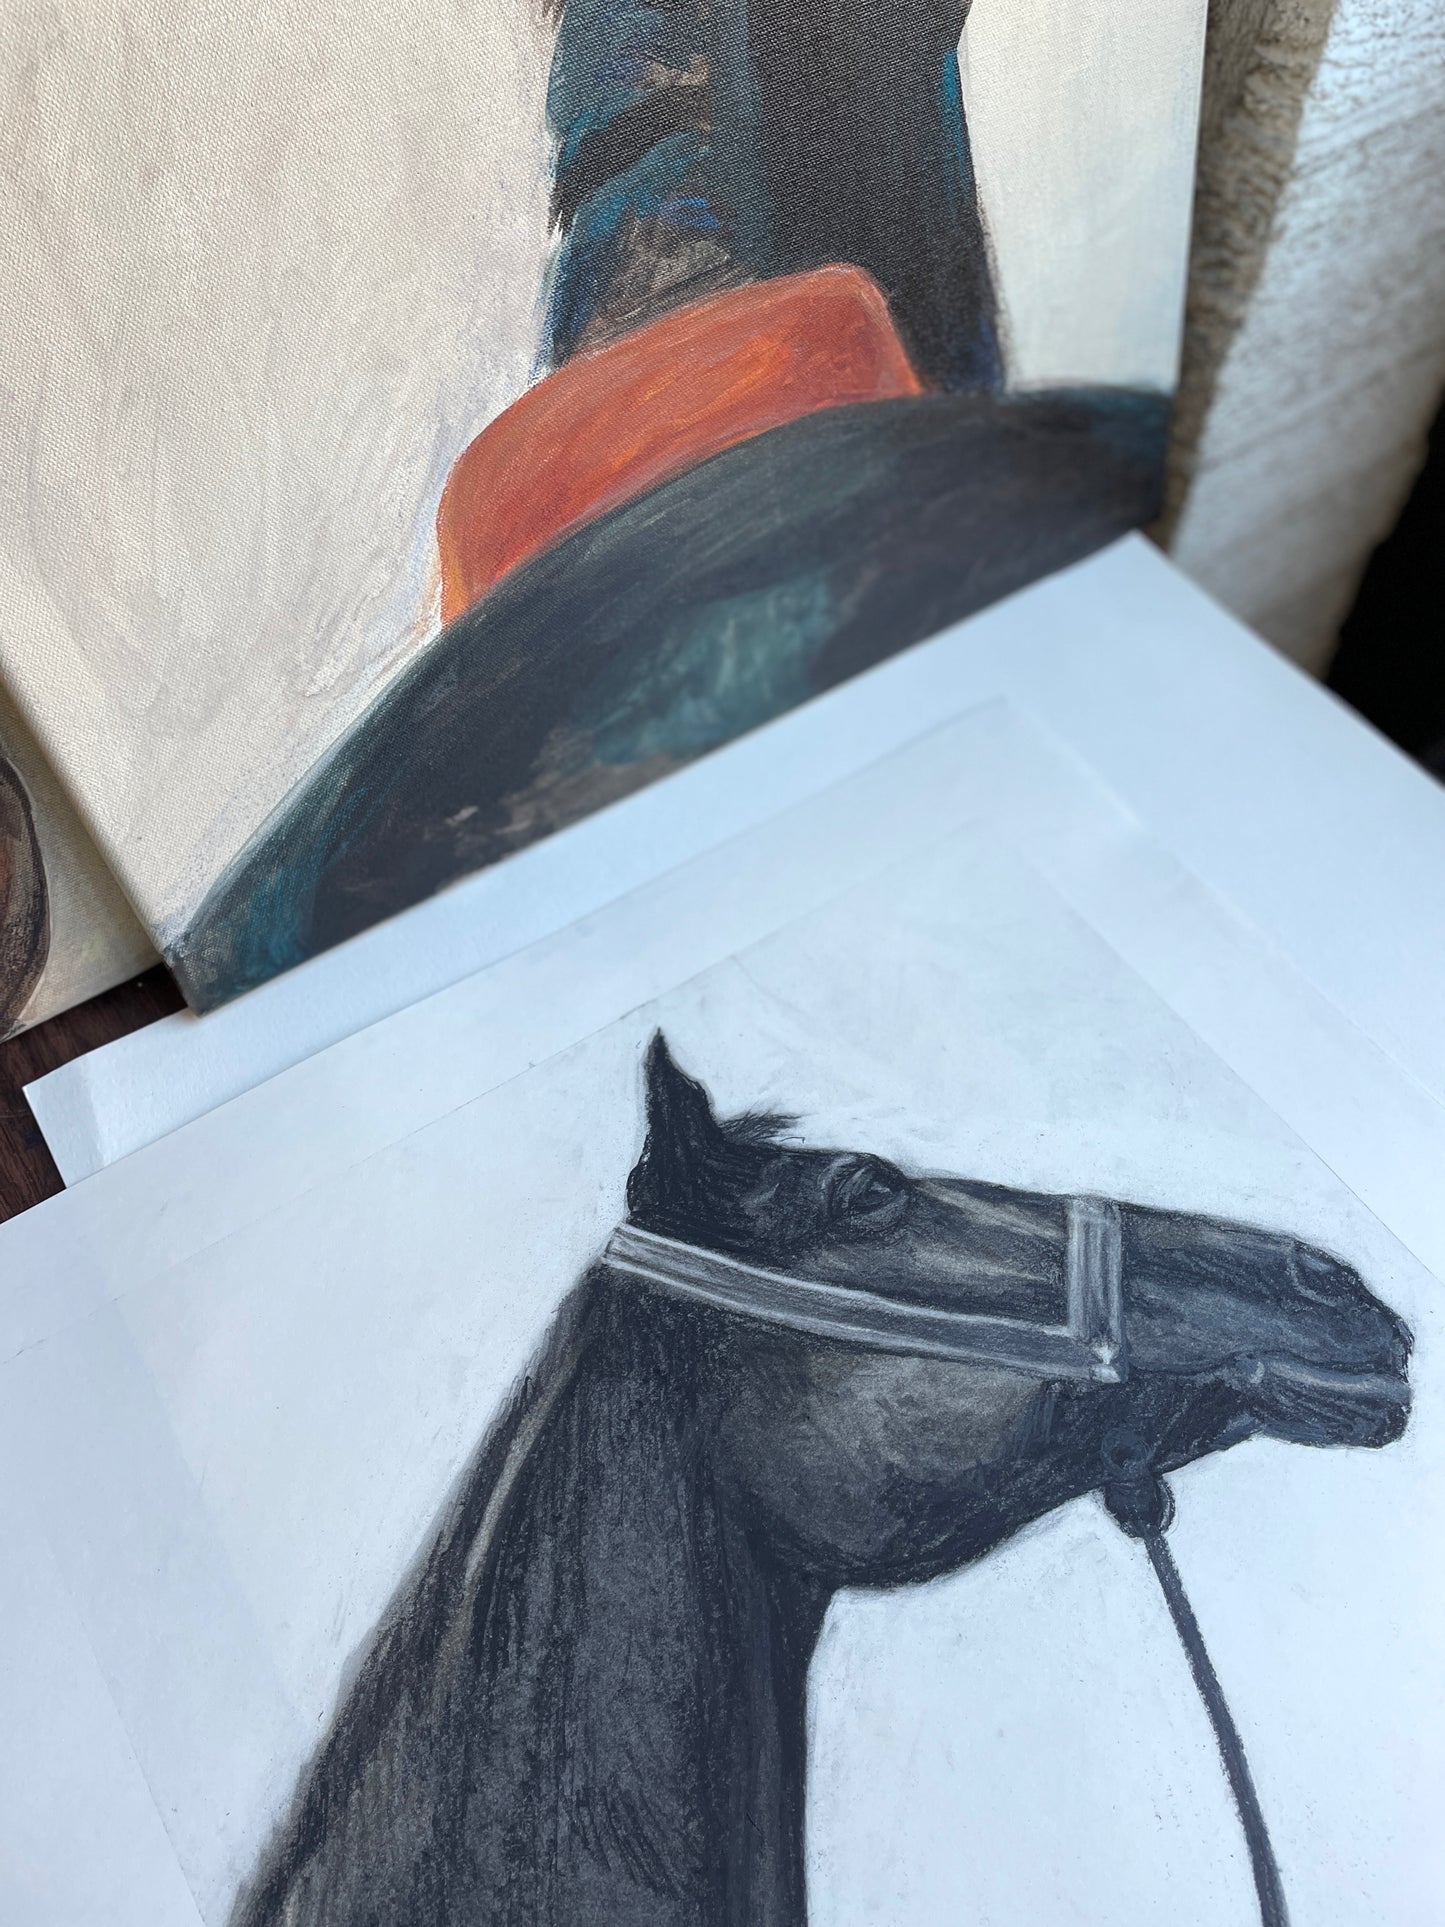 Powerful equine art in charcoal medium